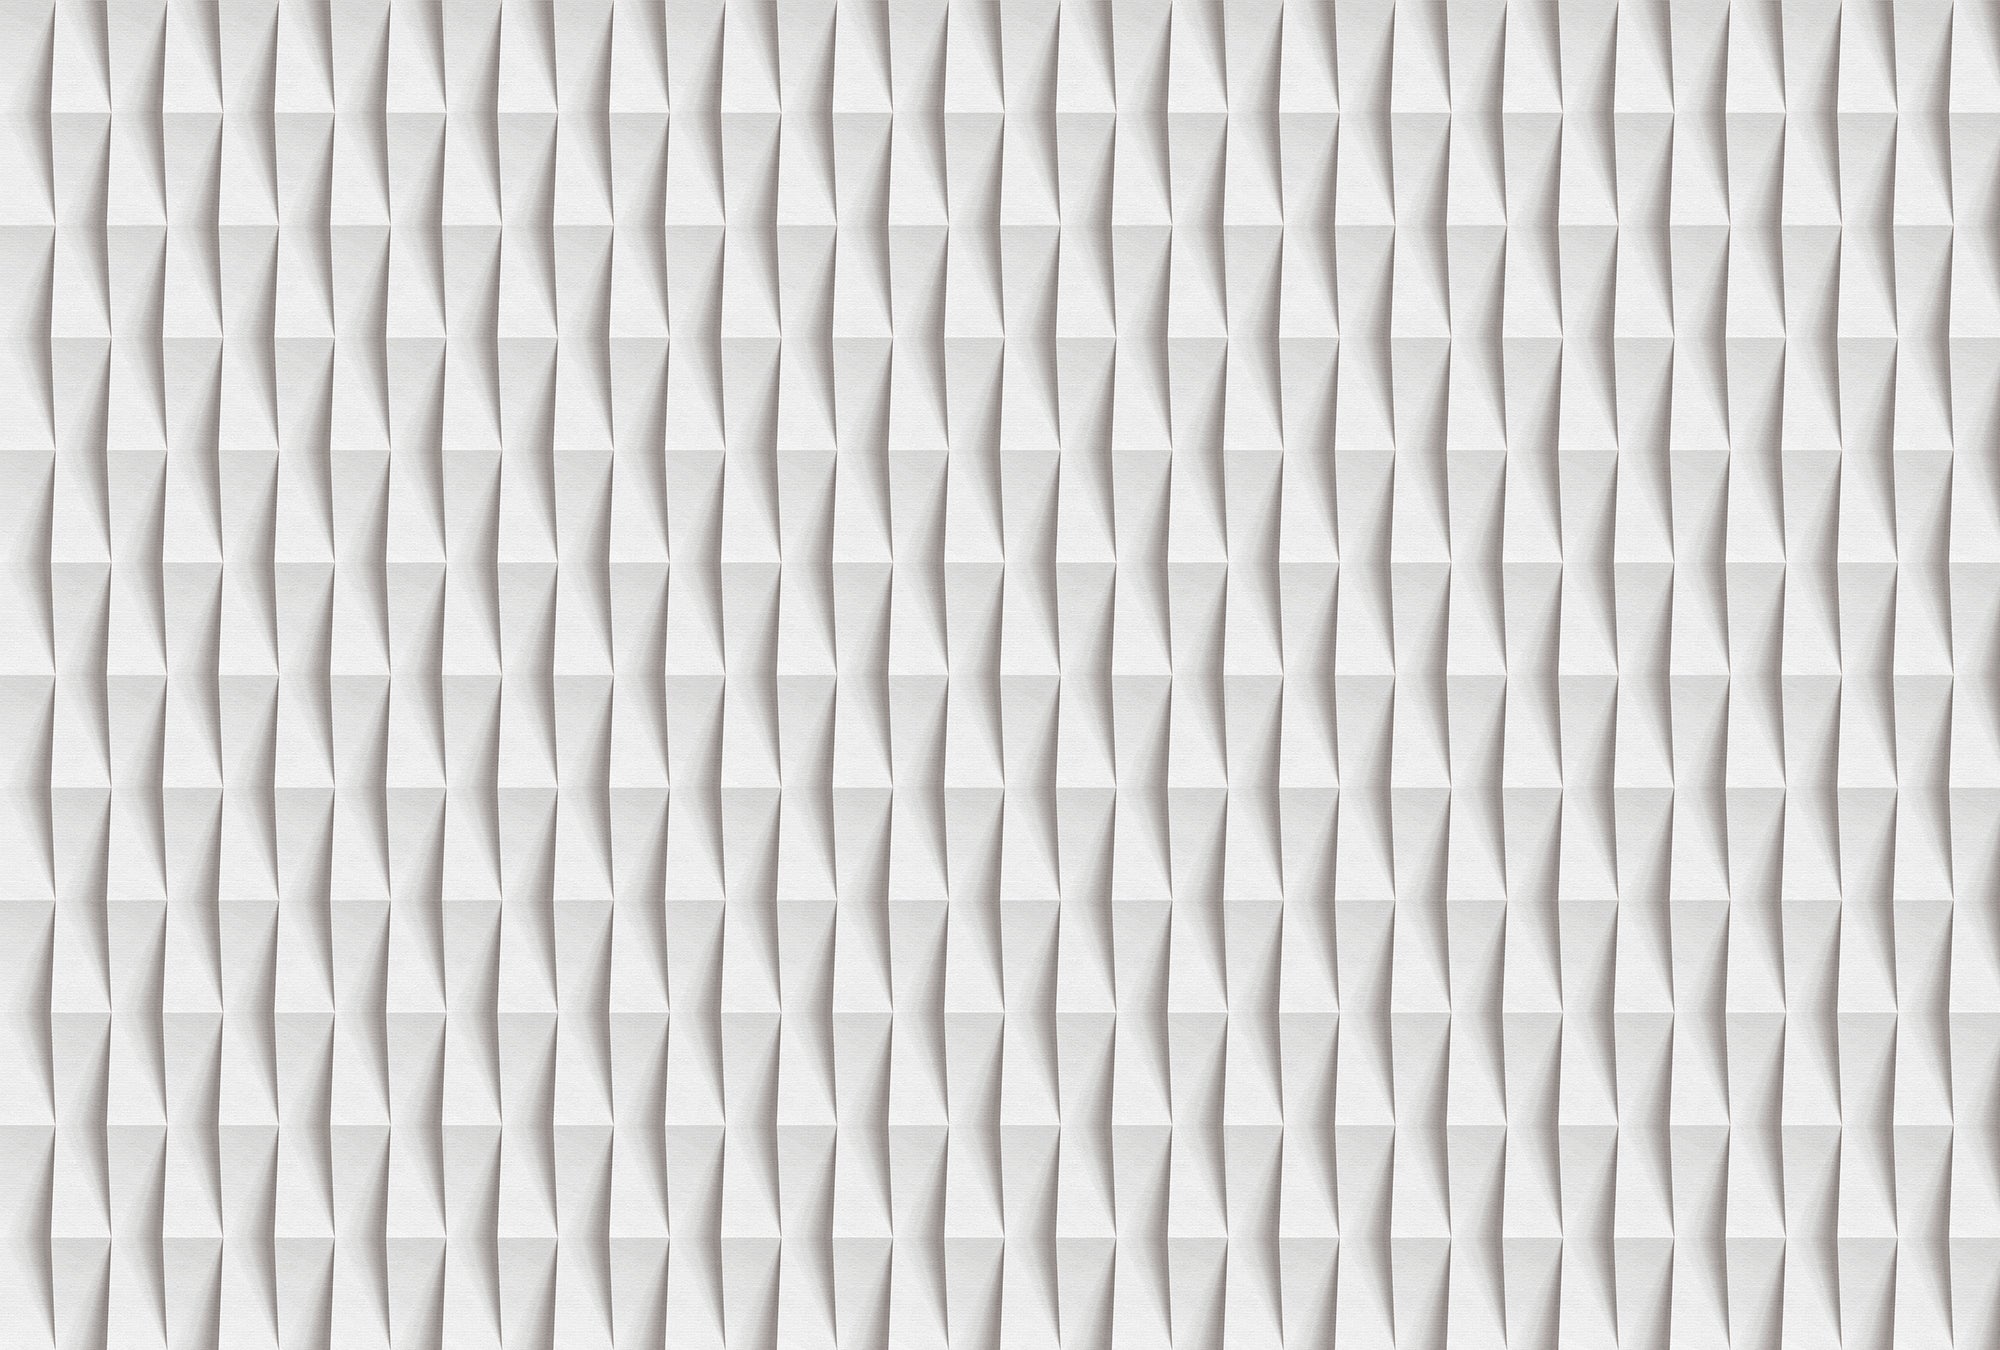 Walls by Patel 3 - Paper House Folding digital print AS Creation Grey   DD122688